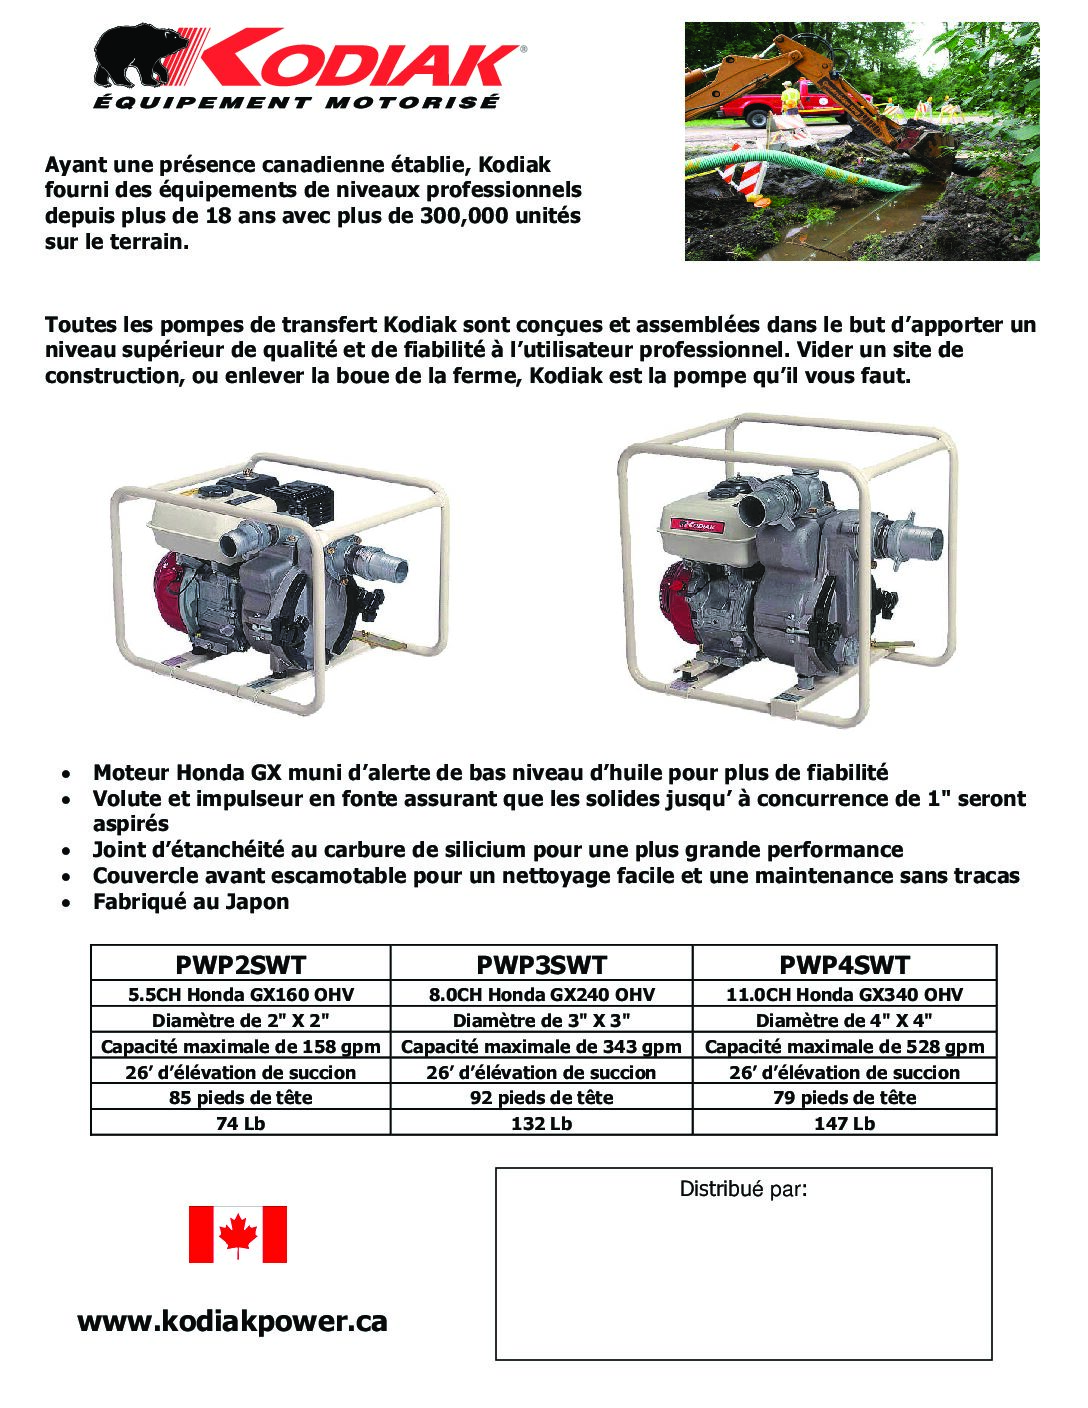 Kodiak PWP4SWT Water Pumps Product Sheet French